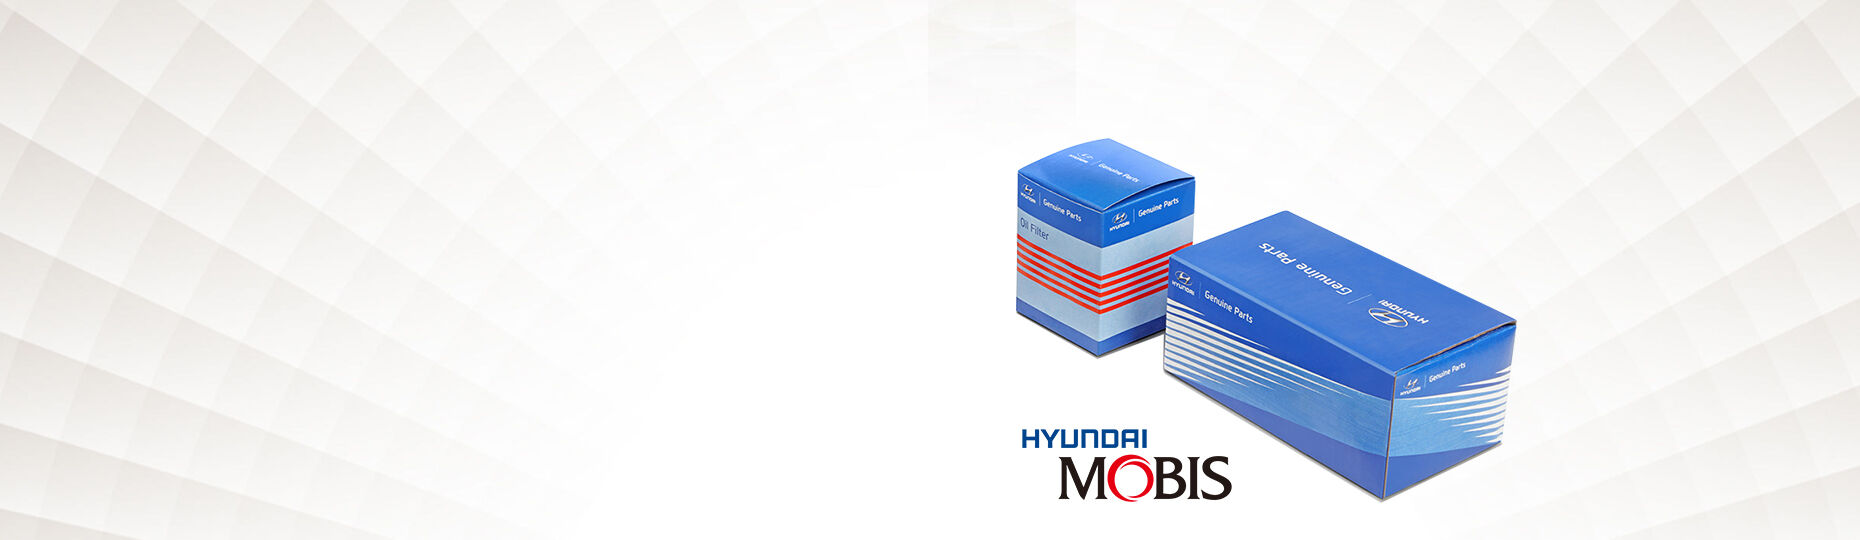 Genuine Parts - Hyundai Parts - Mobis